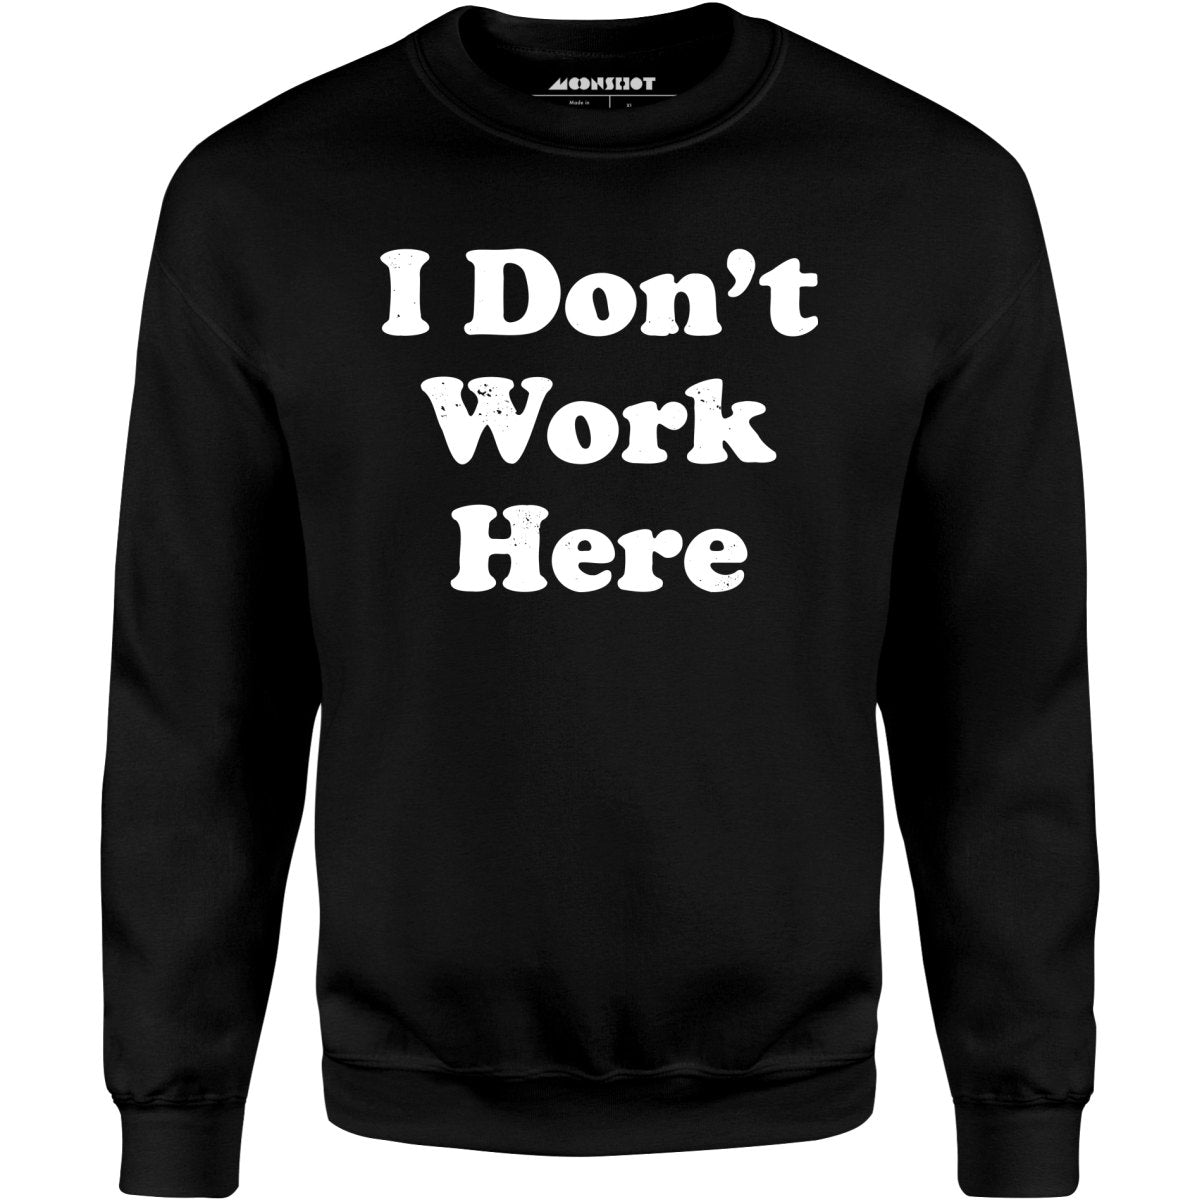 I Don't Work Here - Unisex Sweatshirt